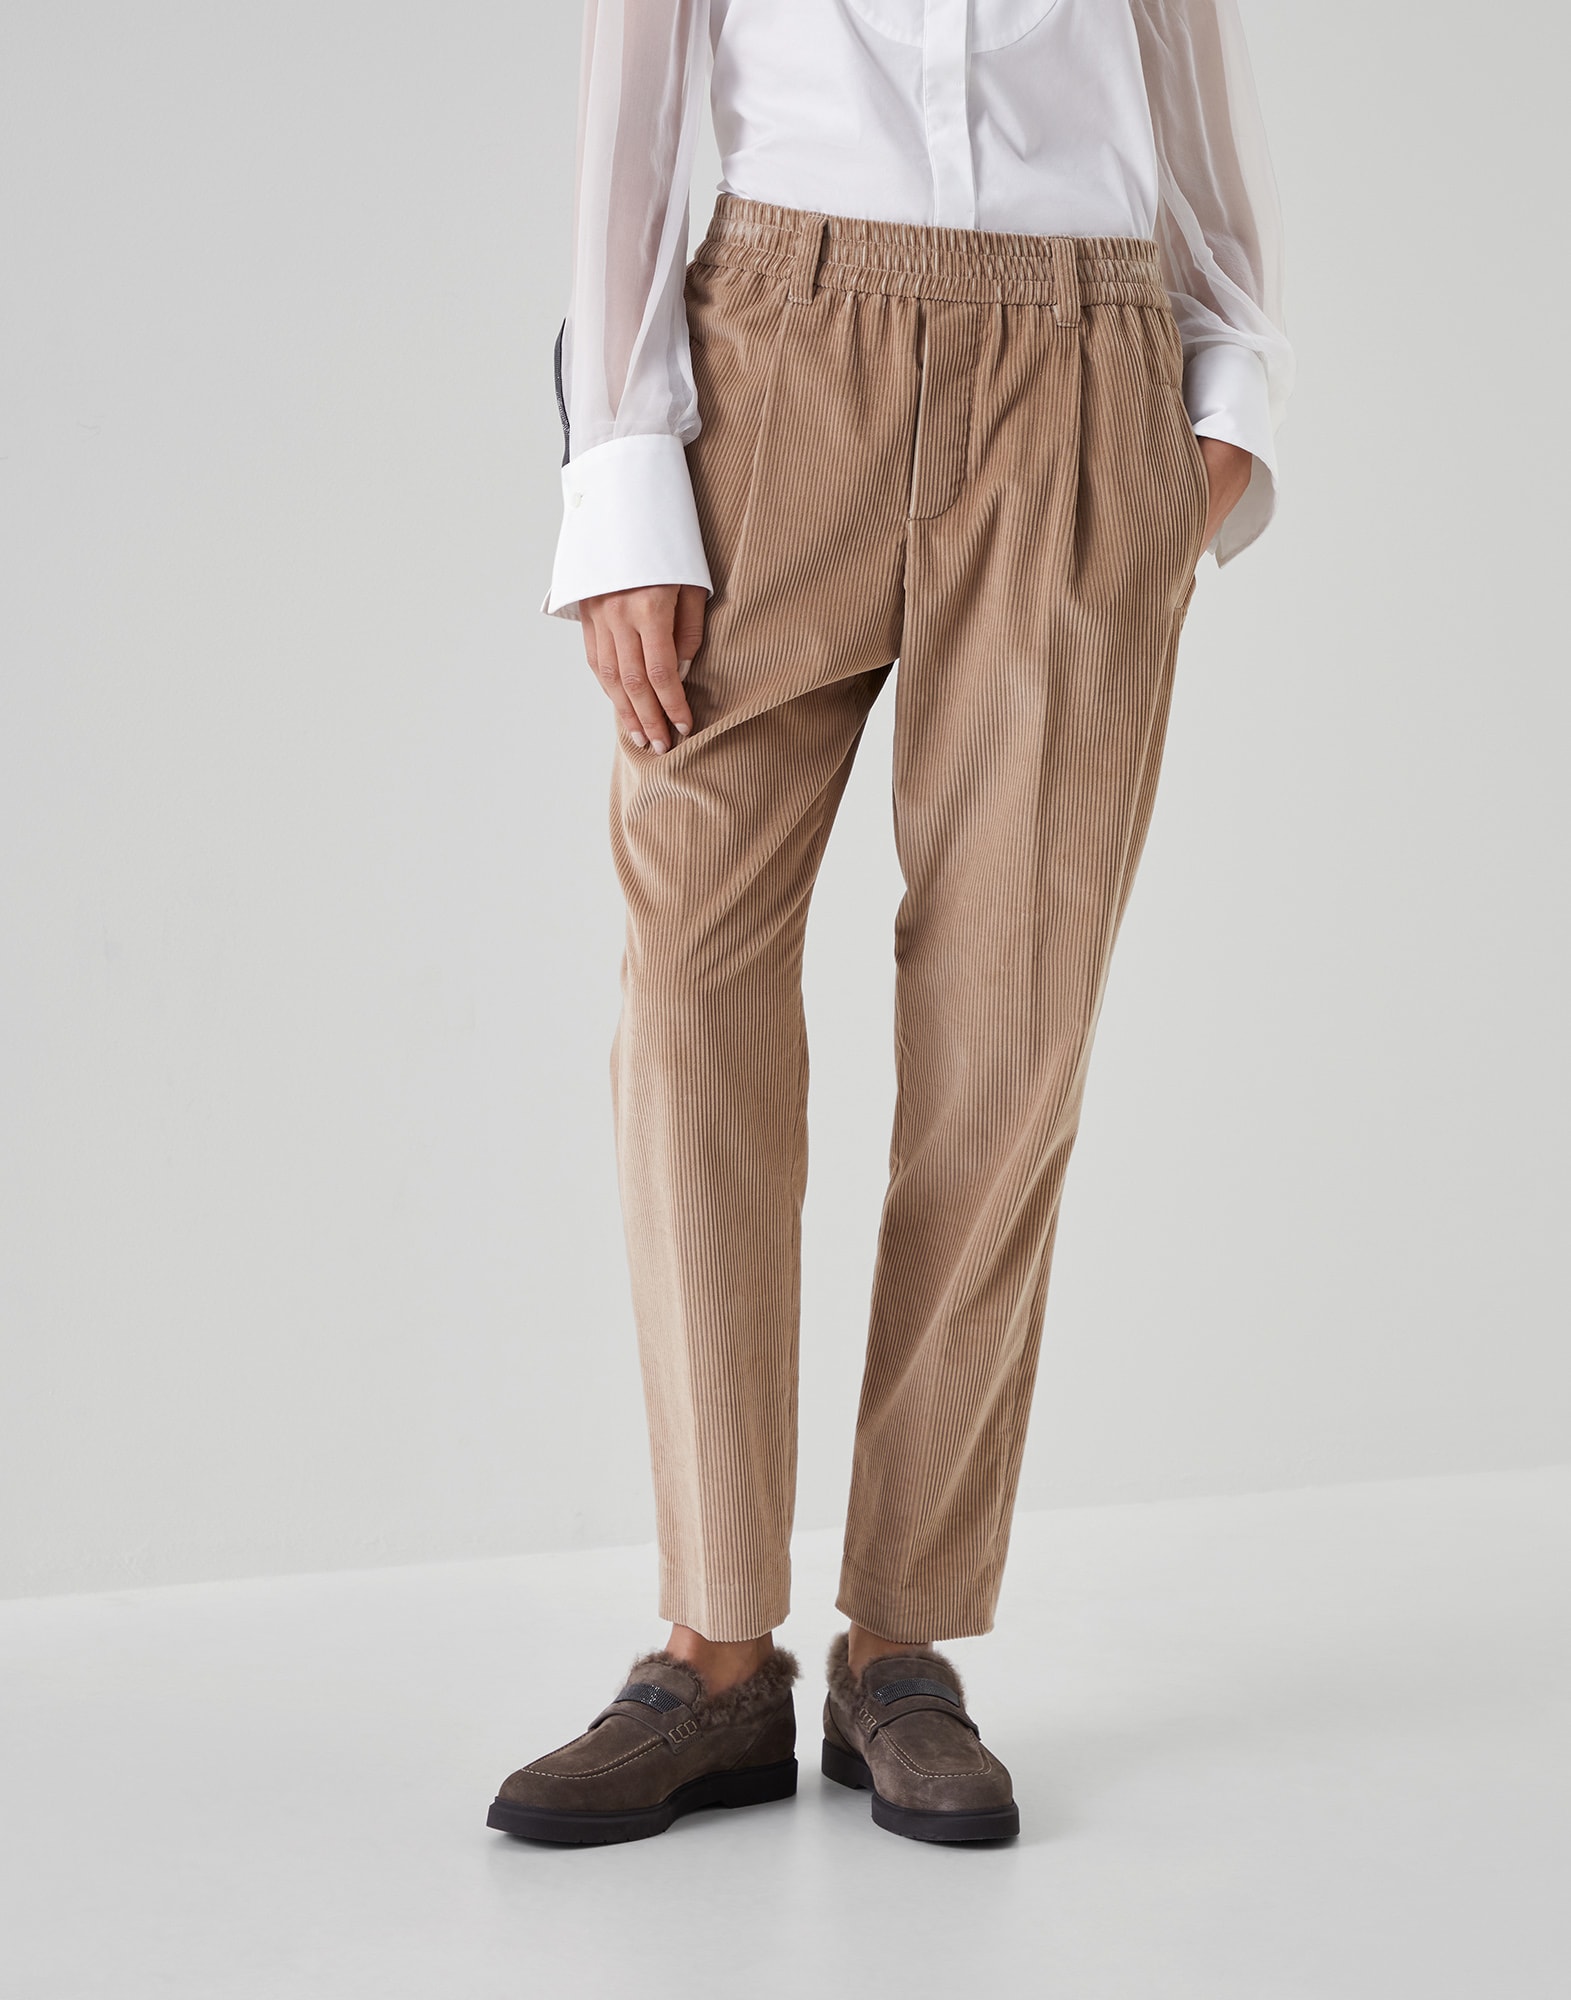 Boys White Trousers Pants Casual Poly-Cotton Baggy Loose Yoga Under  Jubbah/Kamiz | eBay